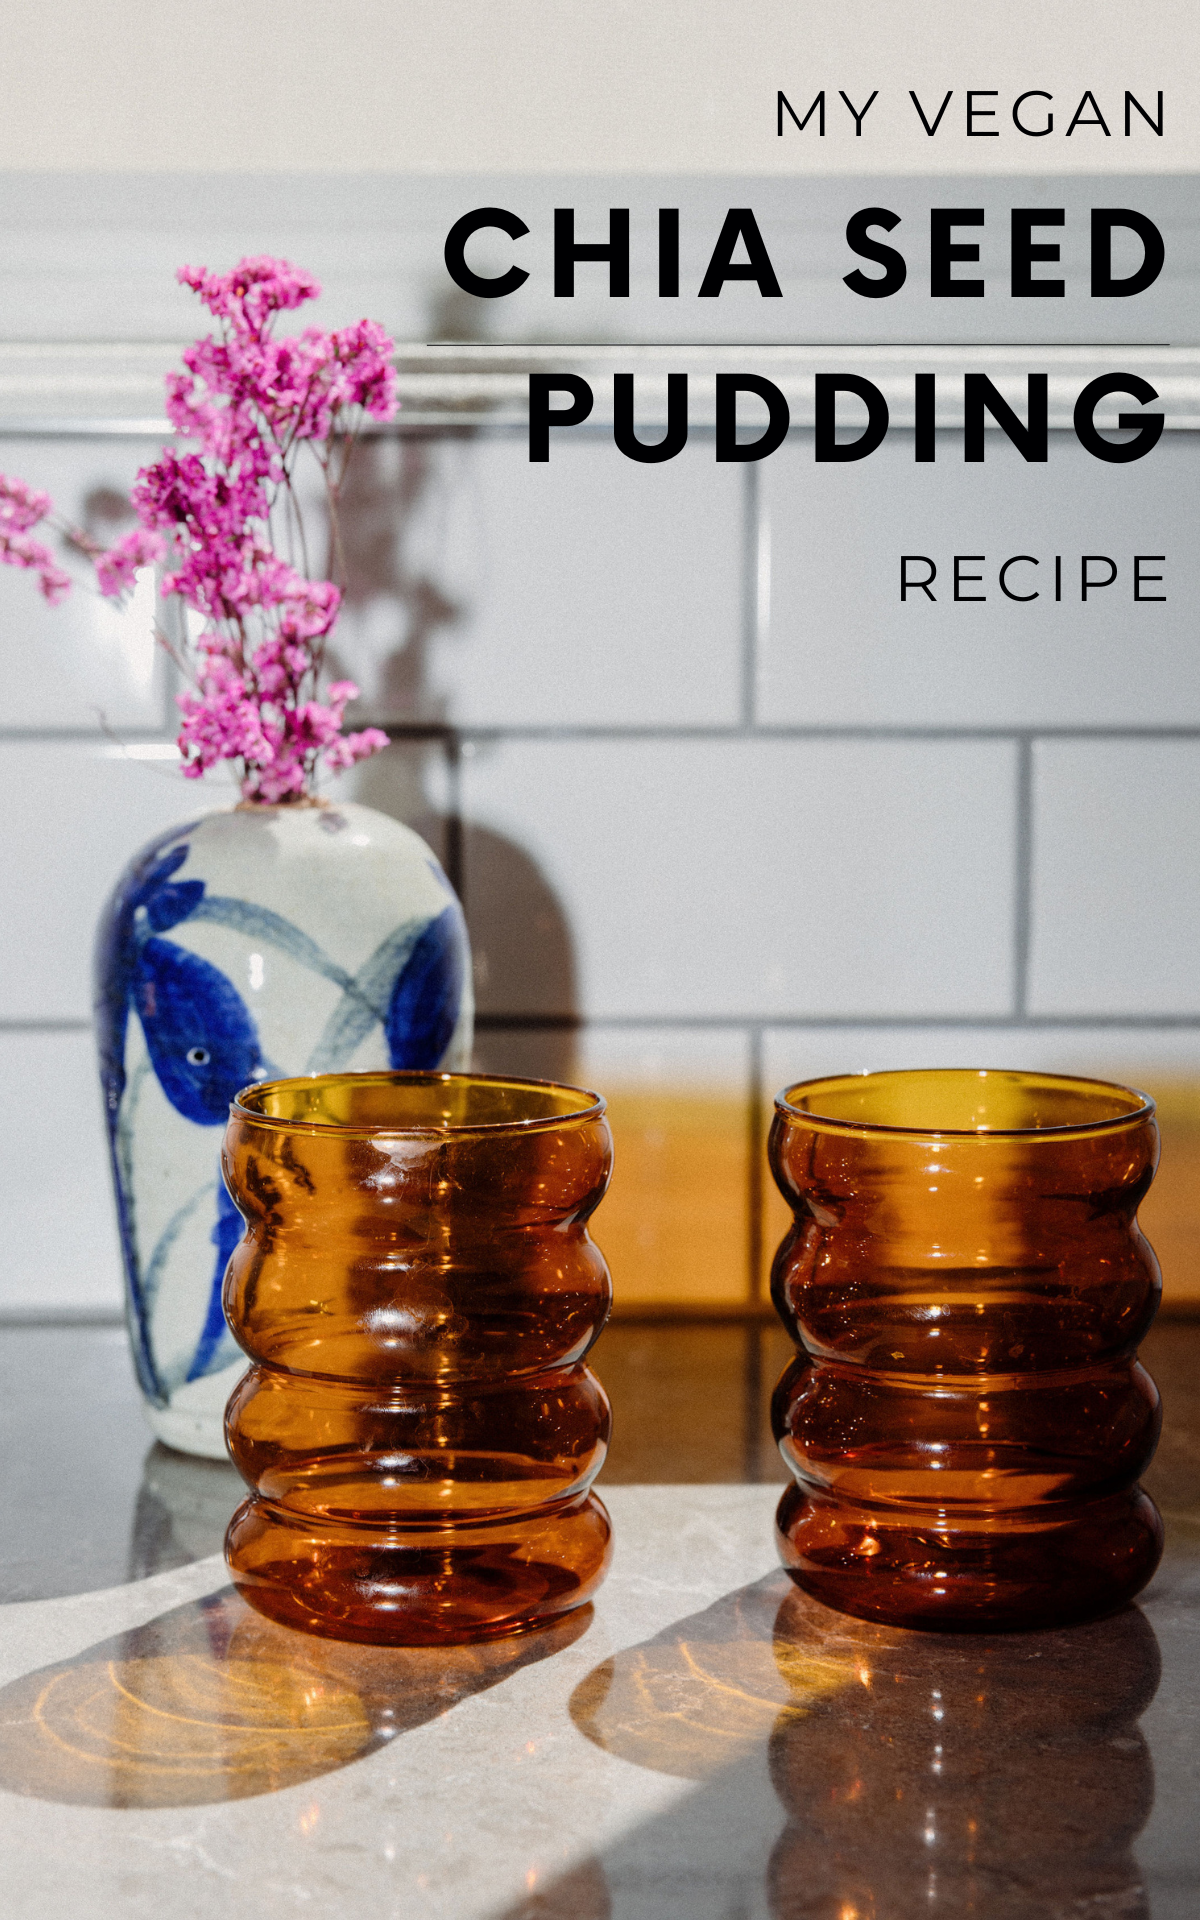 My Vegan Chia Seed Pudding Recipe